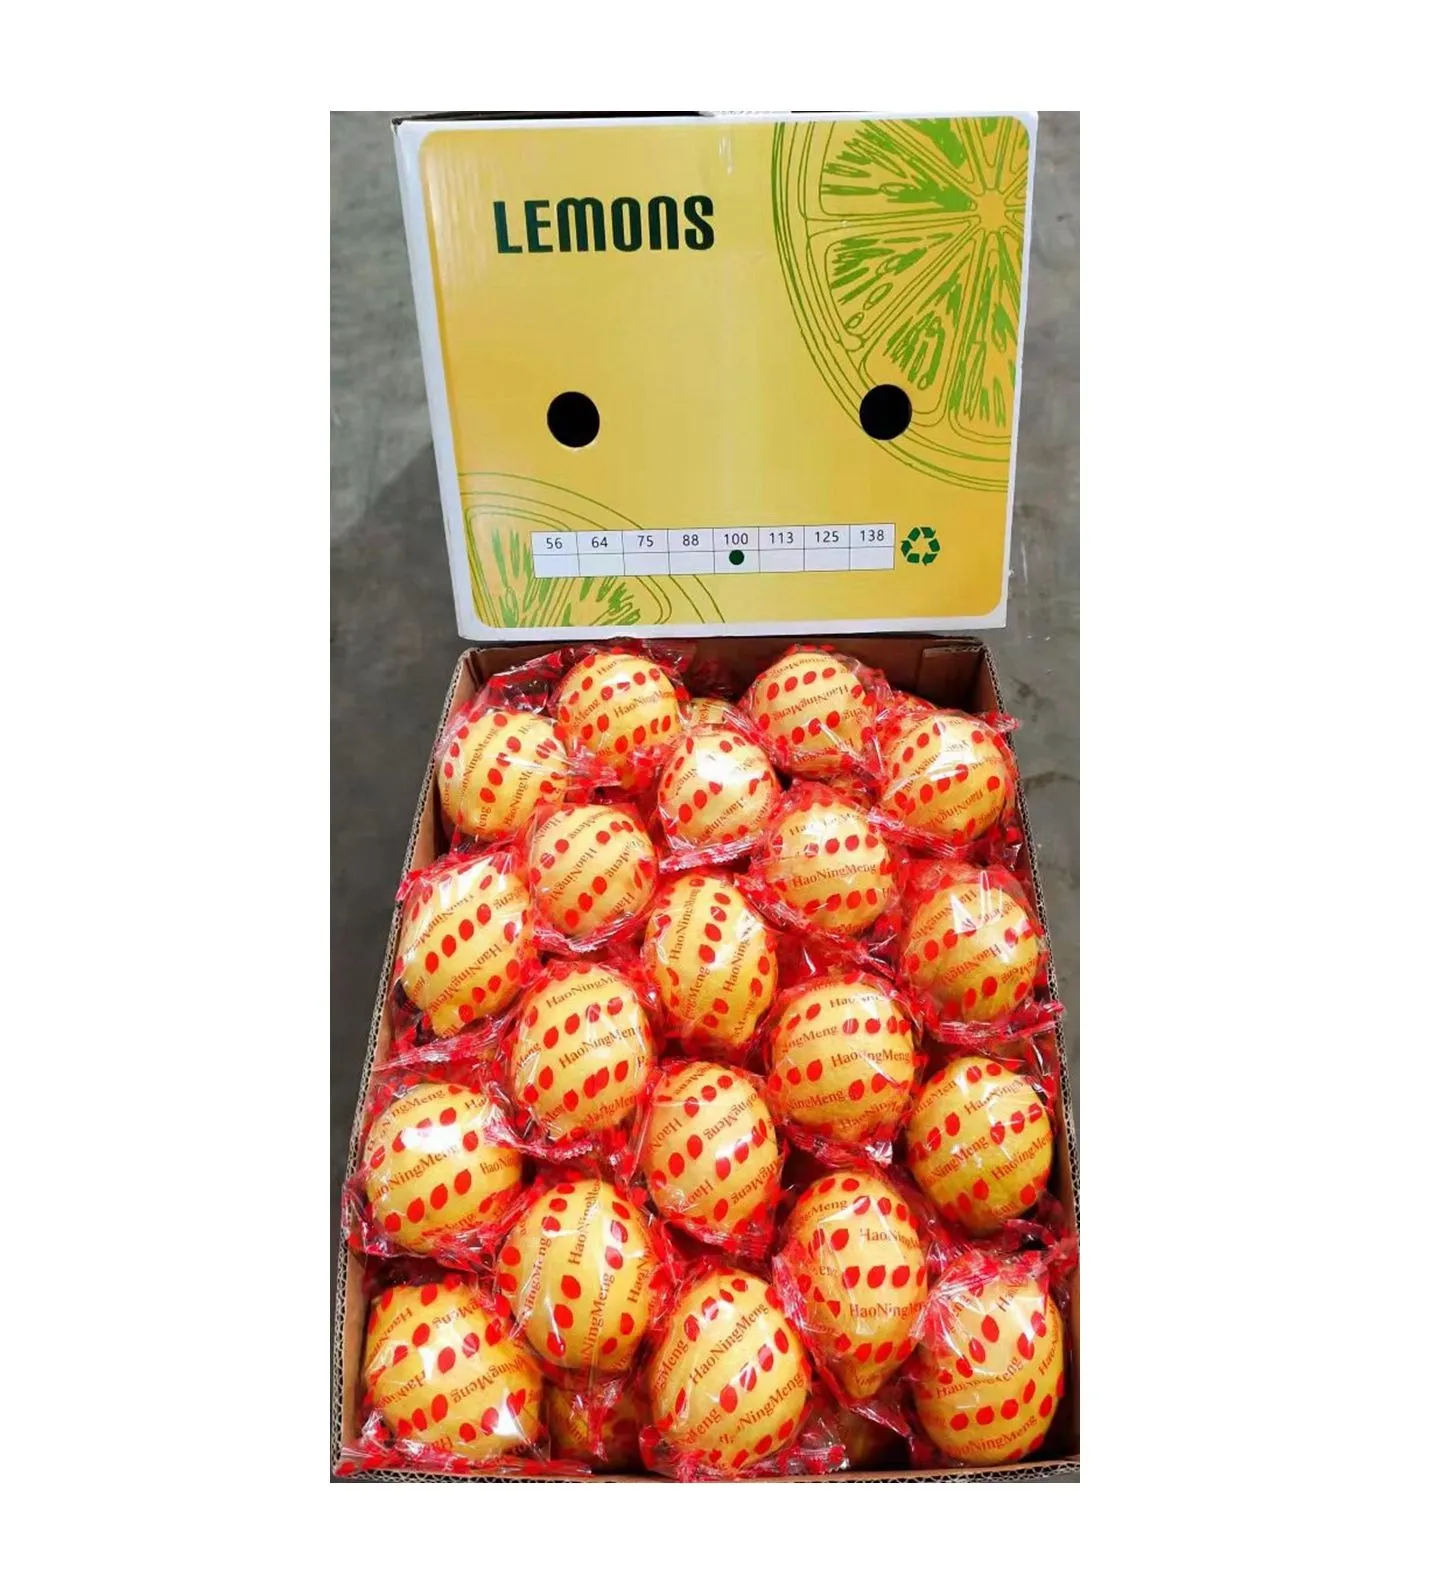 Buy eureka lemon in India + great price with guaranteed quality